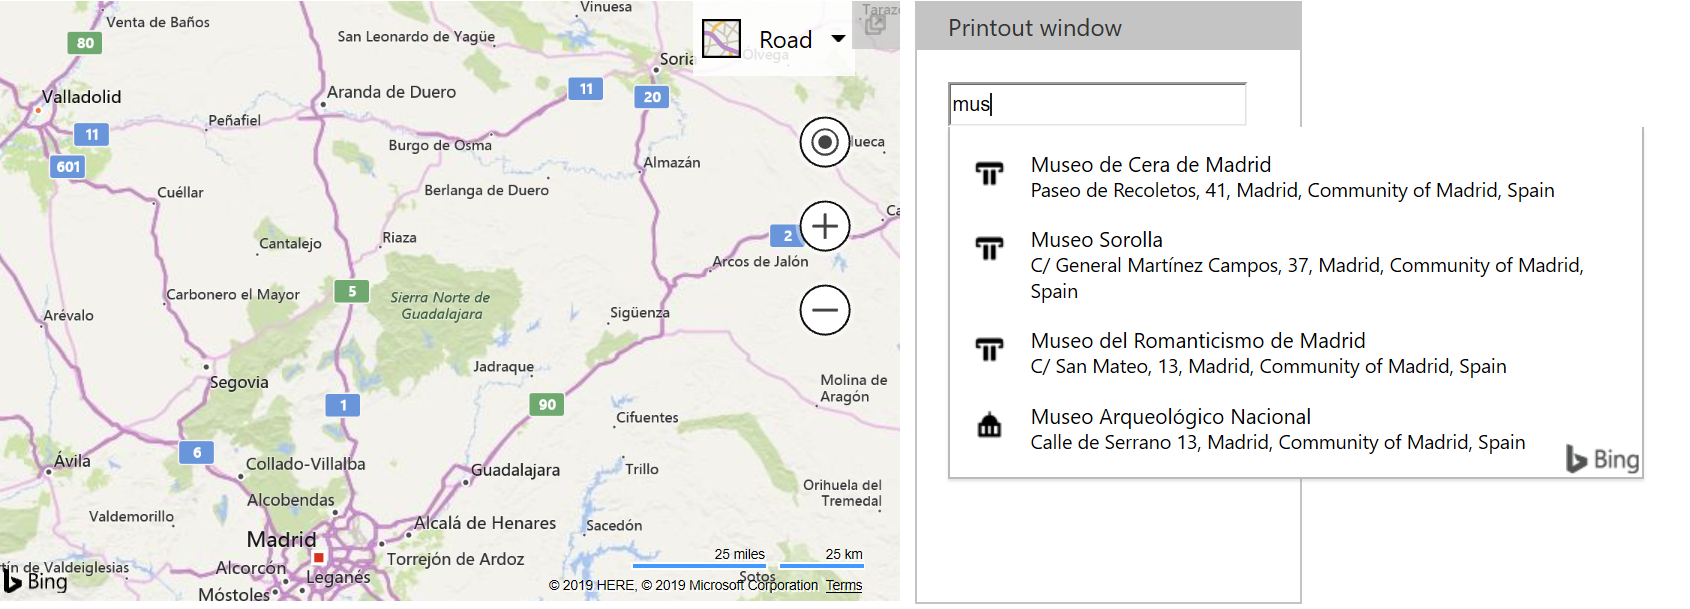 Bing Maps Autosuggest - Spain